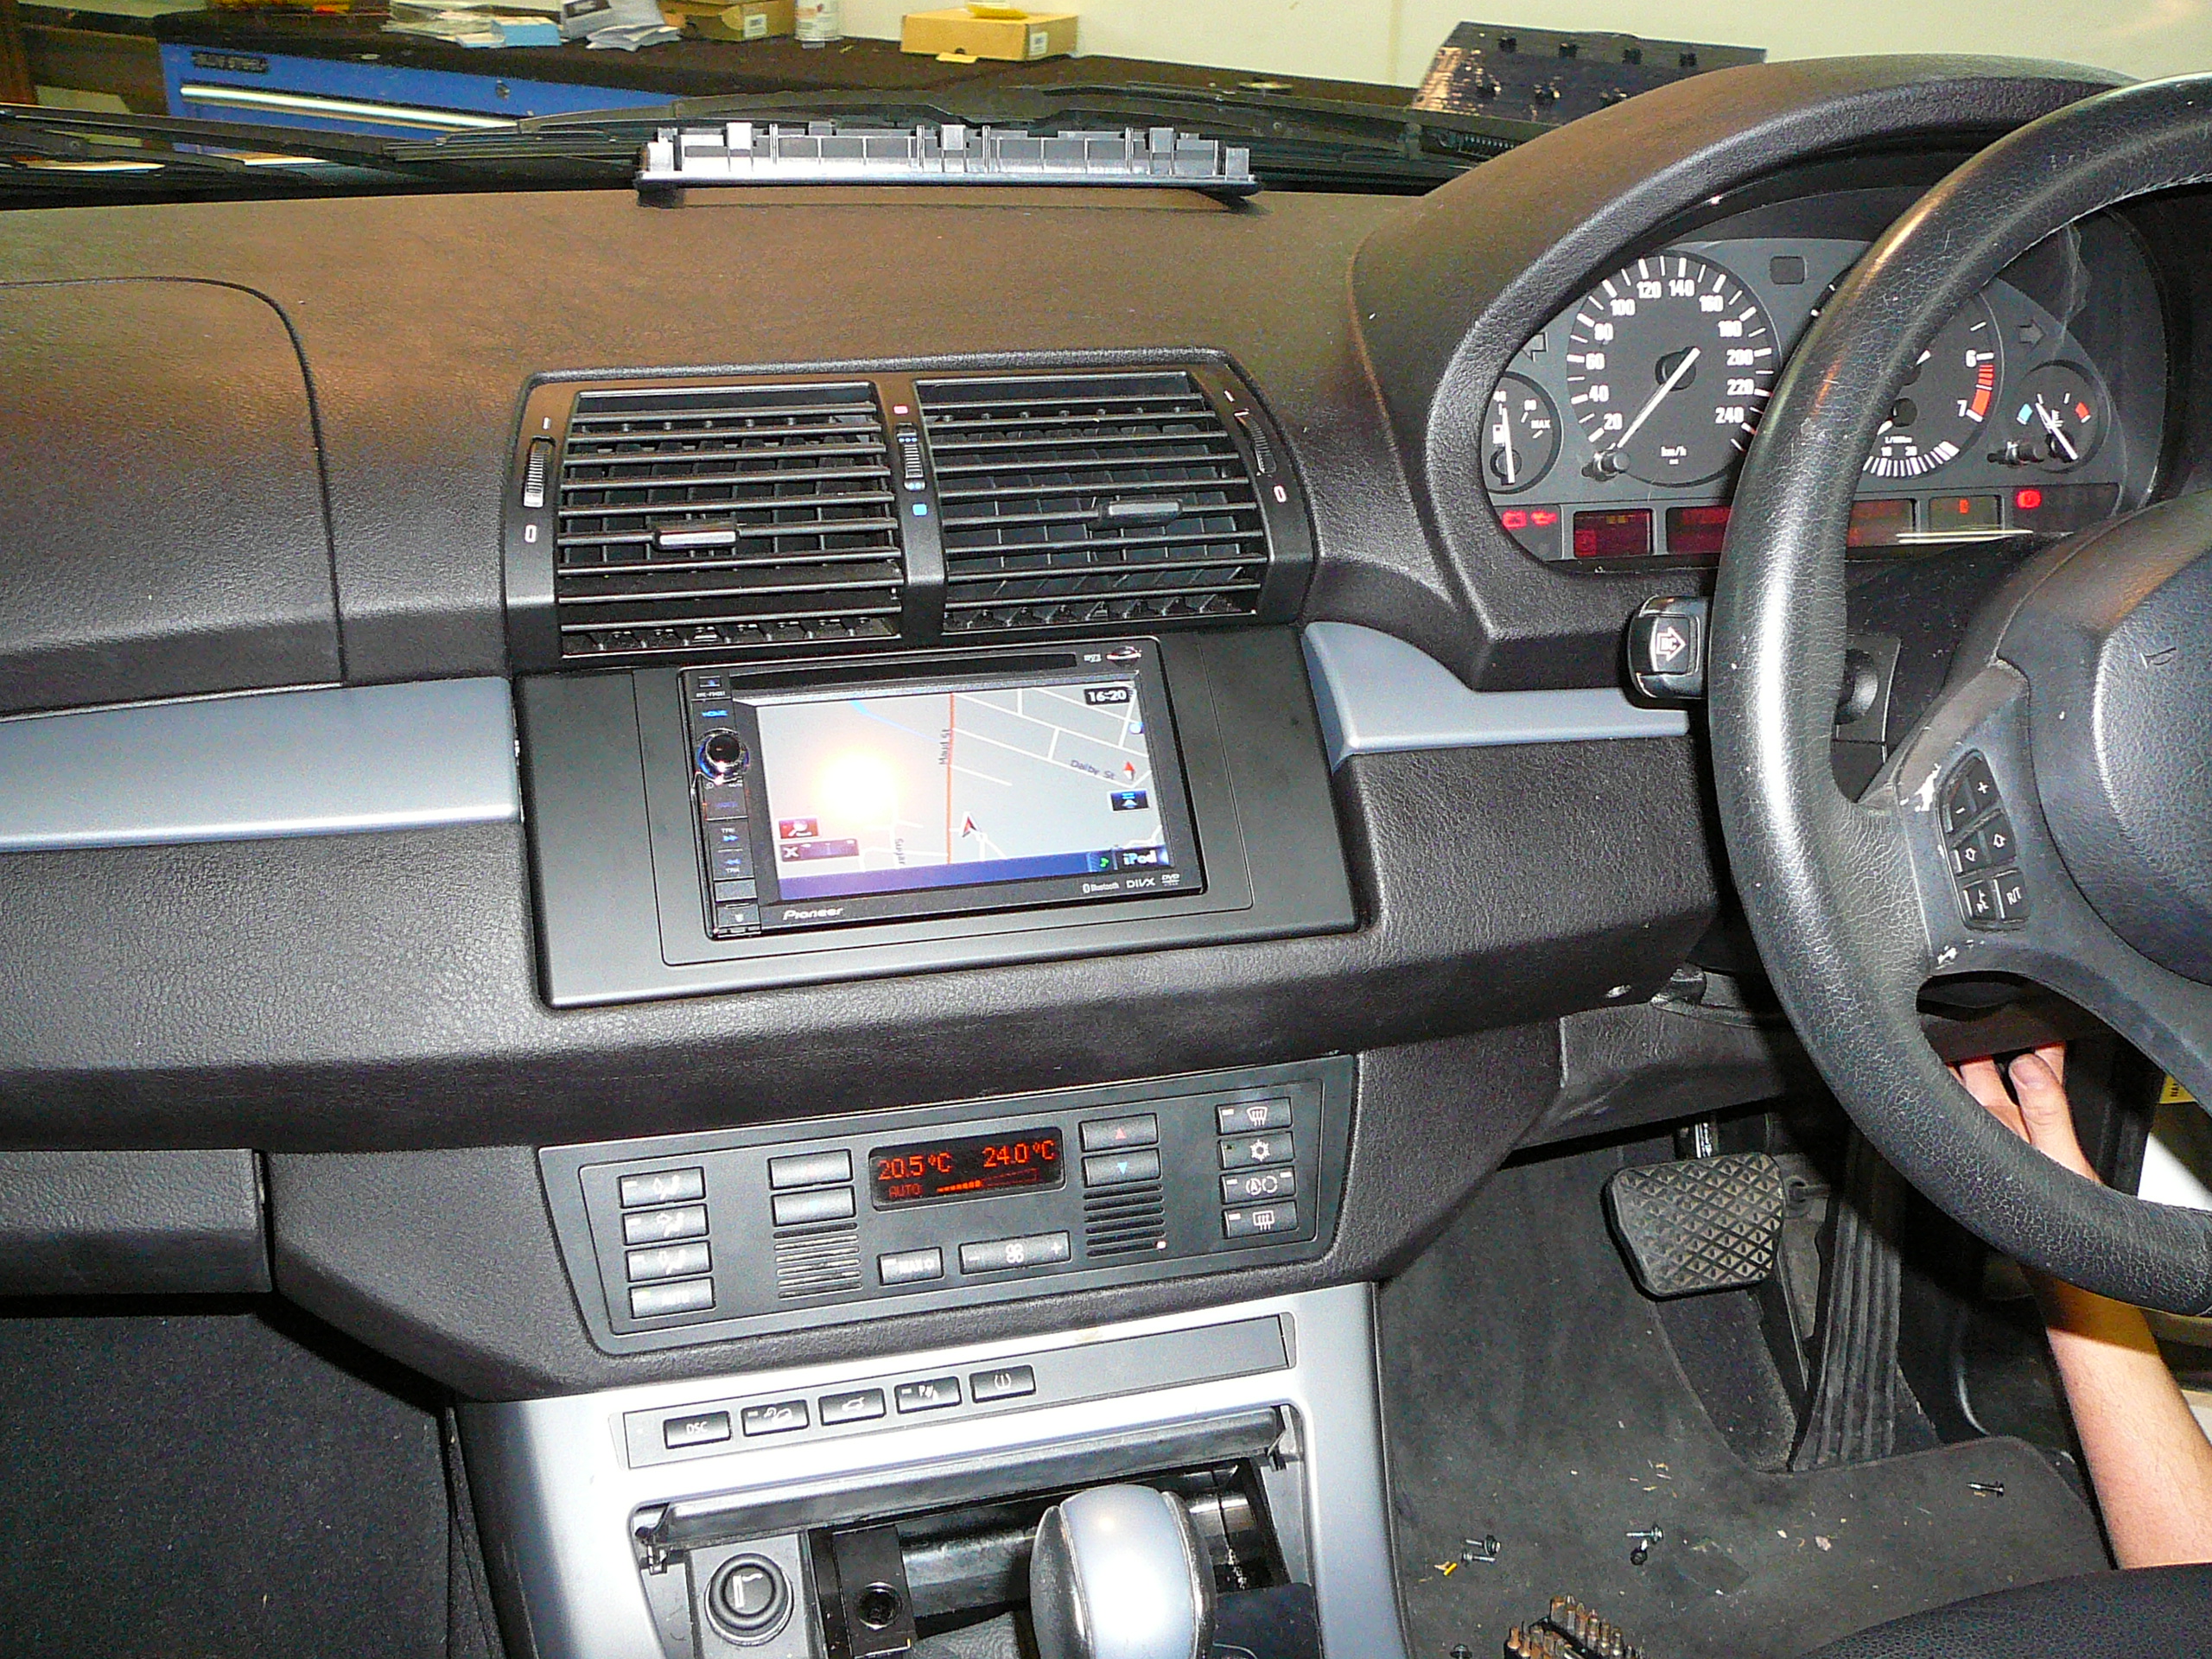 BMW X5 2005, Pioneer GPS Navigation